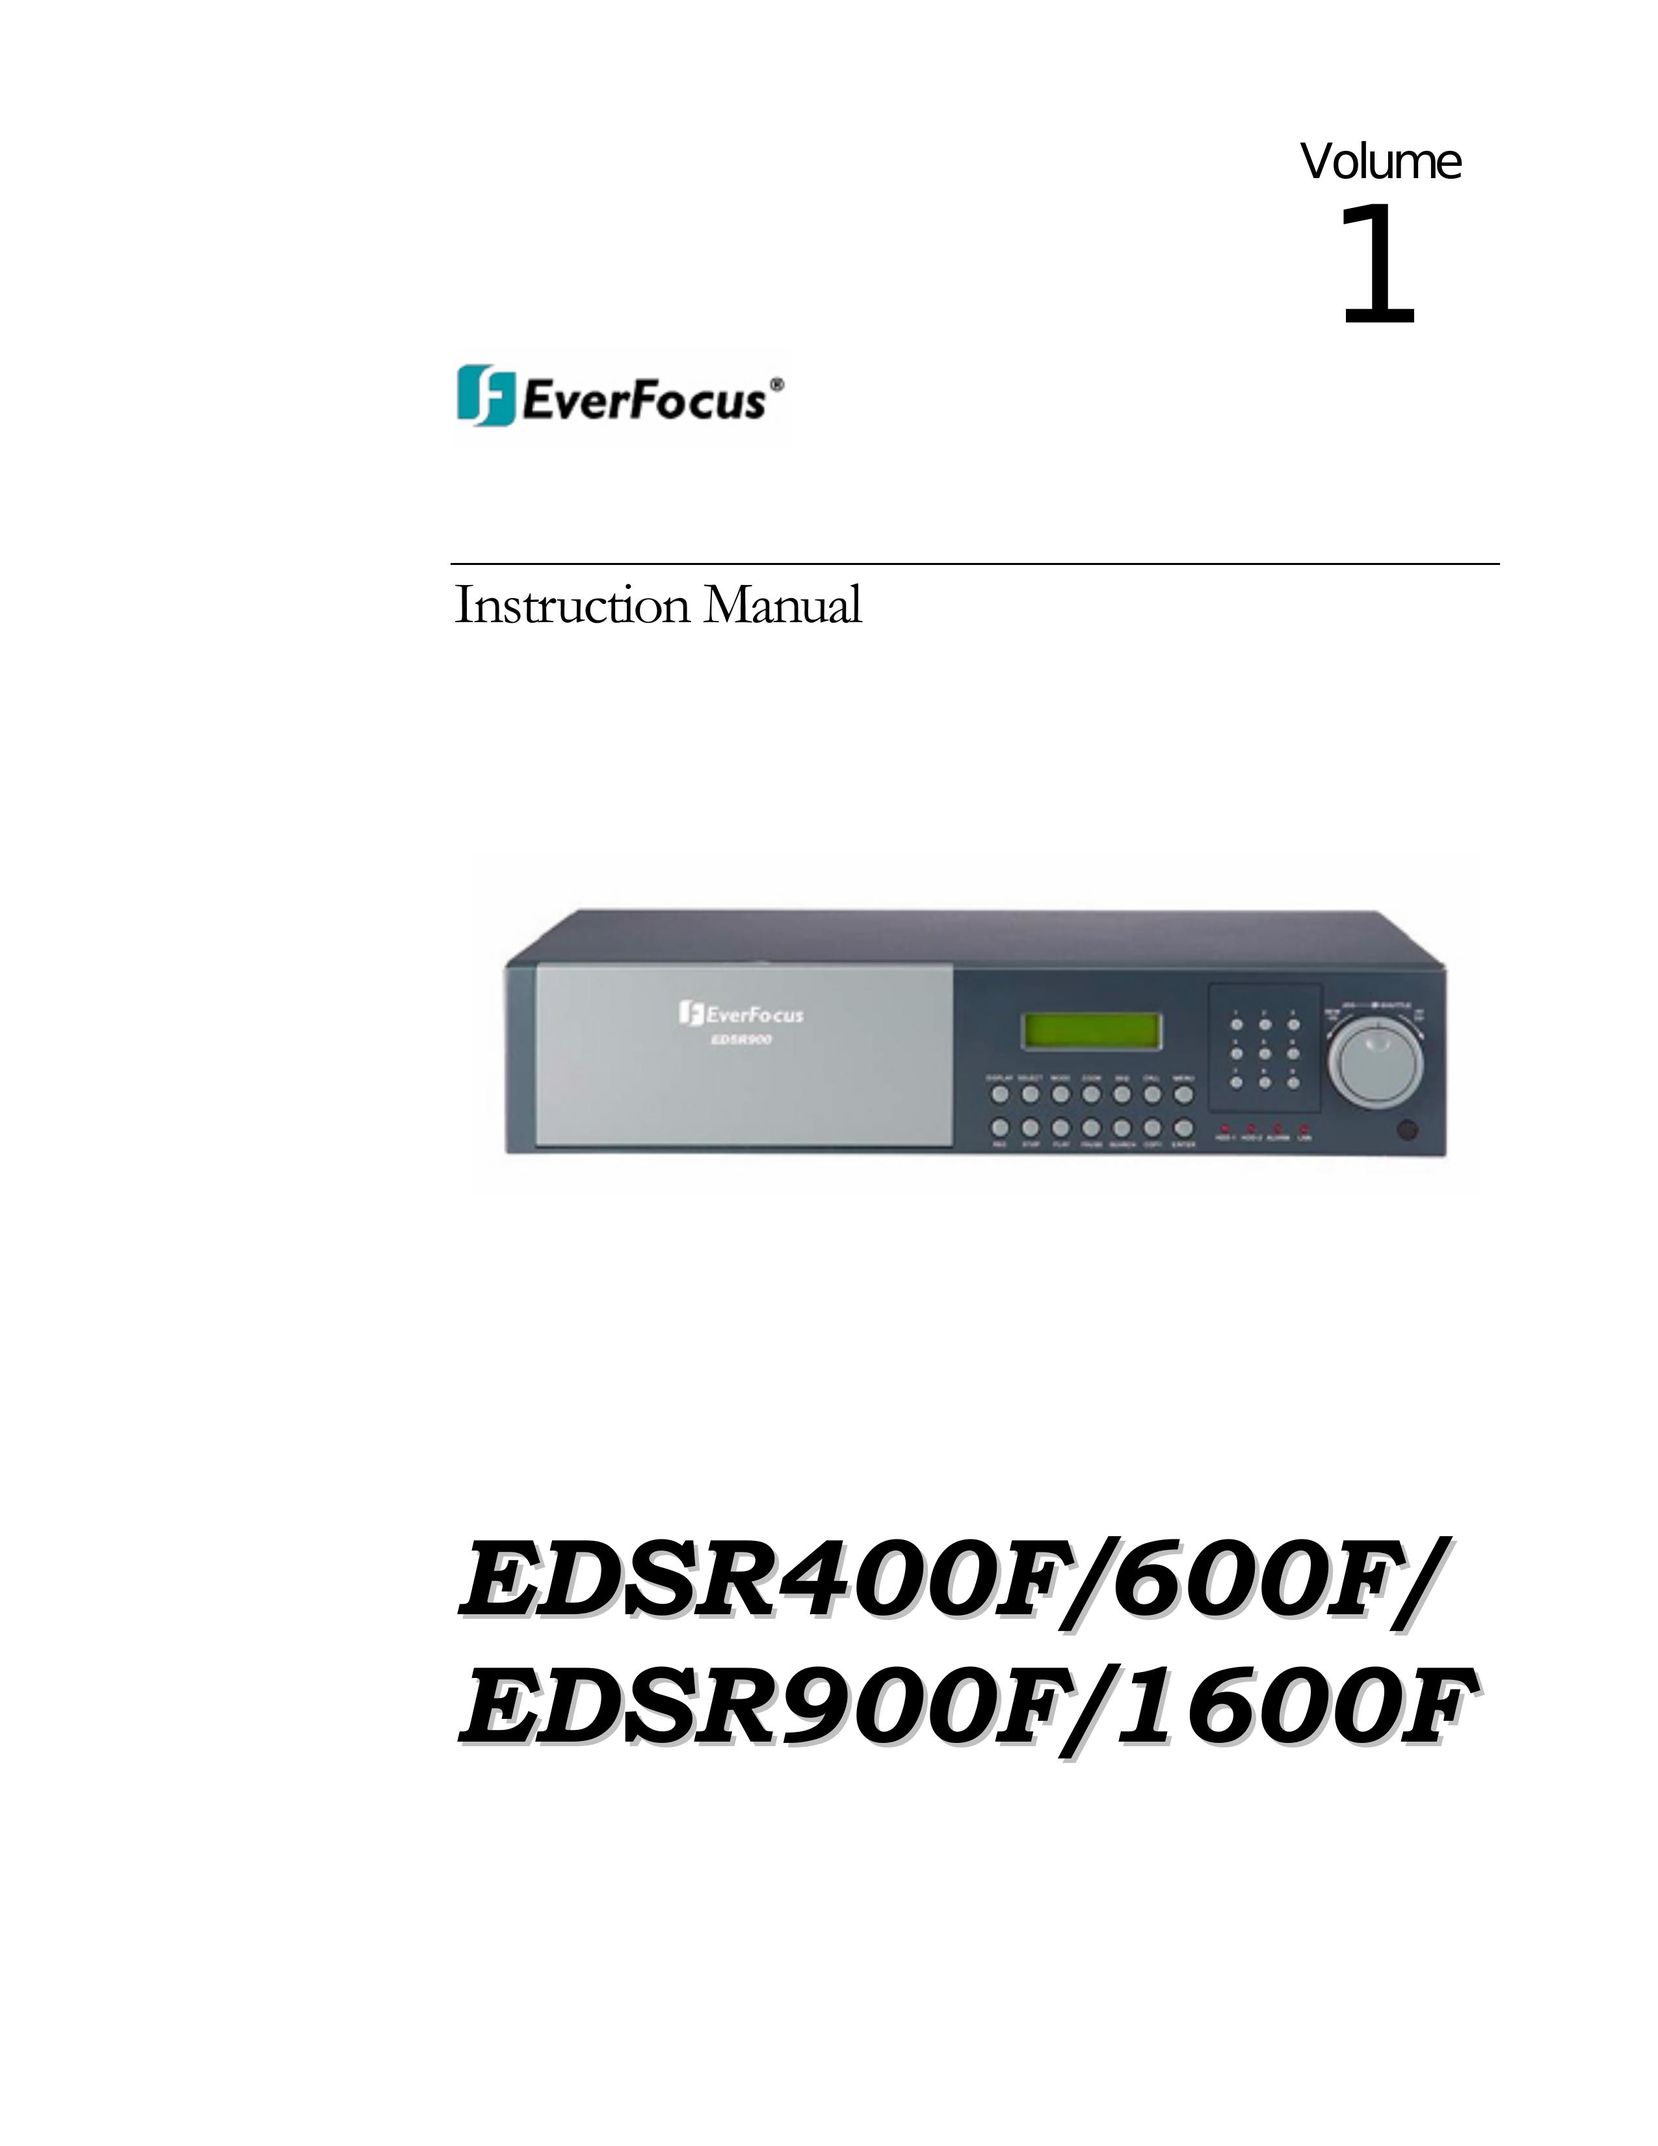 EverFocus EDSR 900F Boiler User Manual